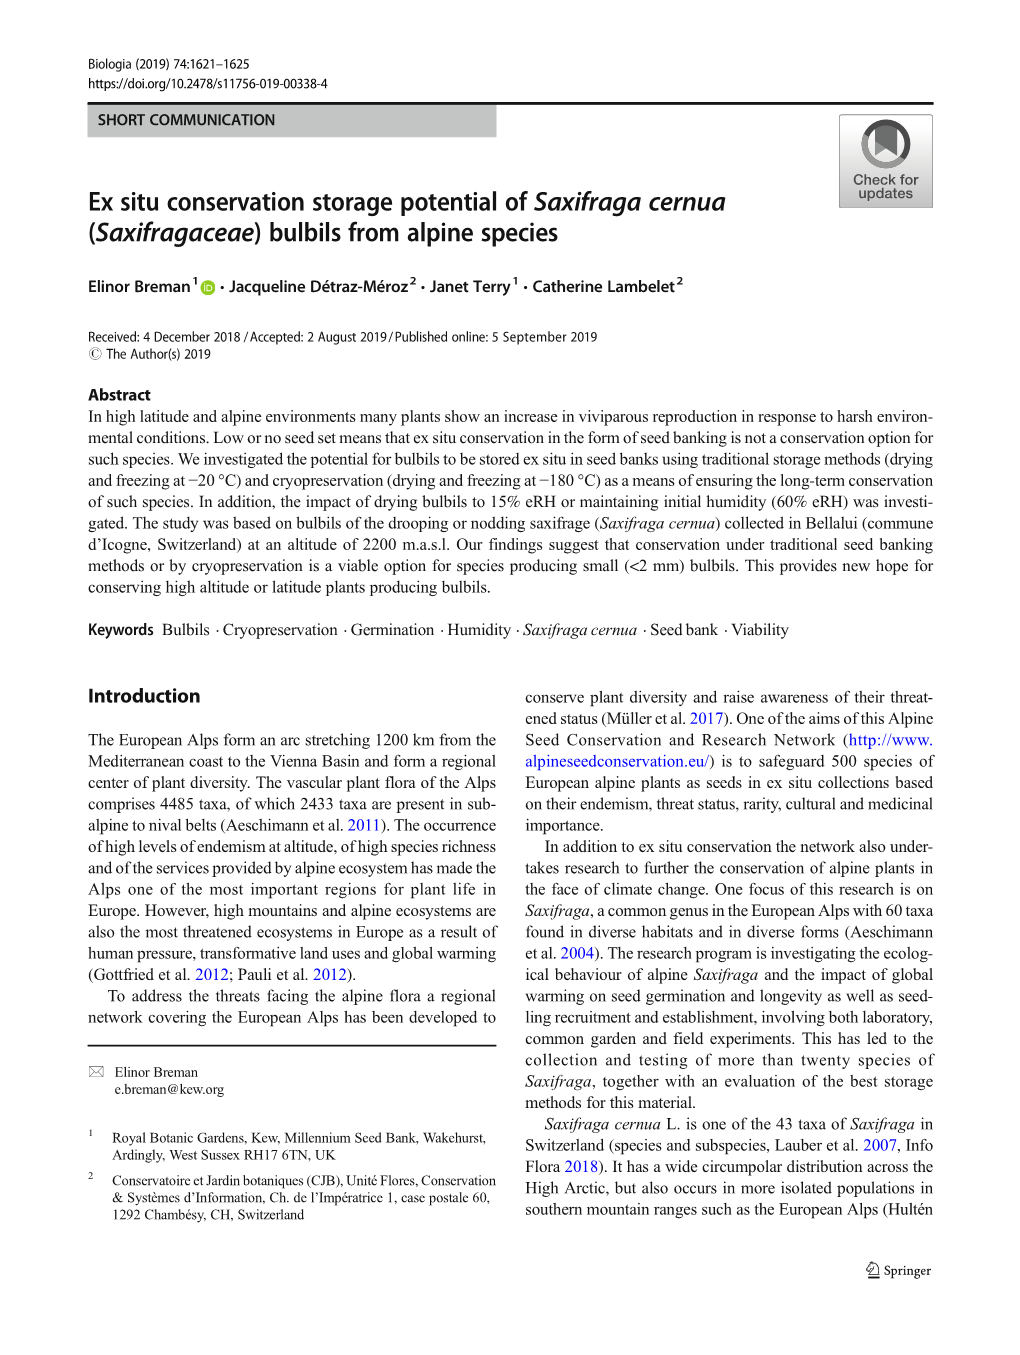 Ex Situ Conservation Storage Potential of Saxifraga Cernua (Saxifragaceae) Bulbils from Alpine Species